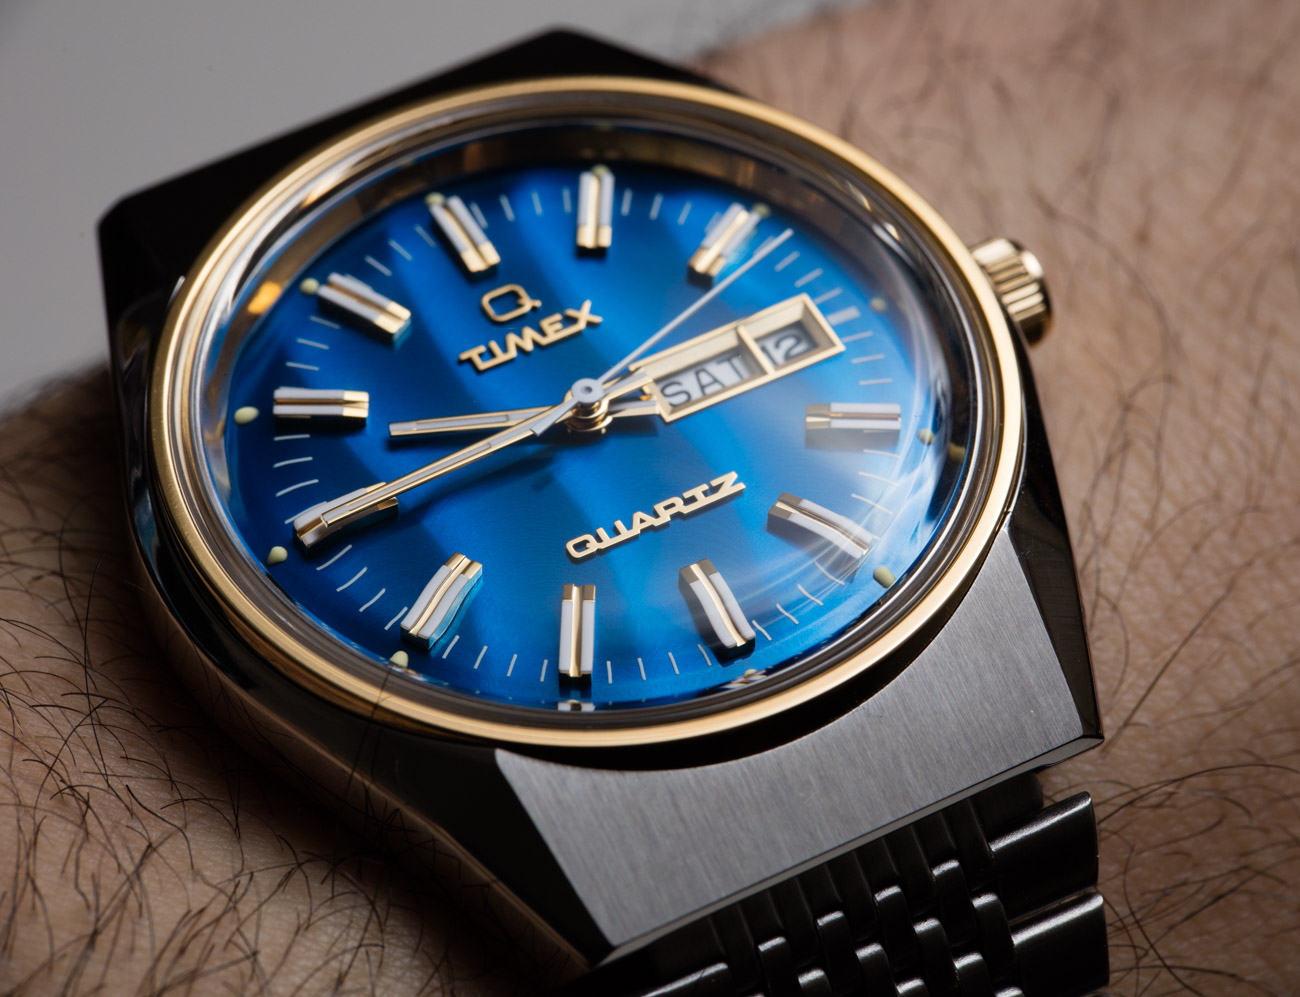 Q Timex Falcon Eye Watch Review | aBlogtoWatch